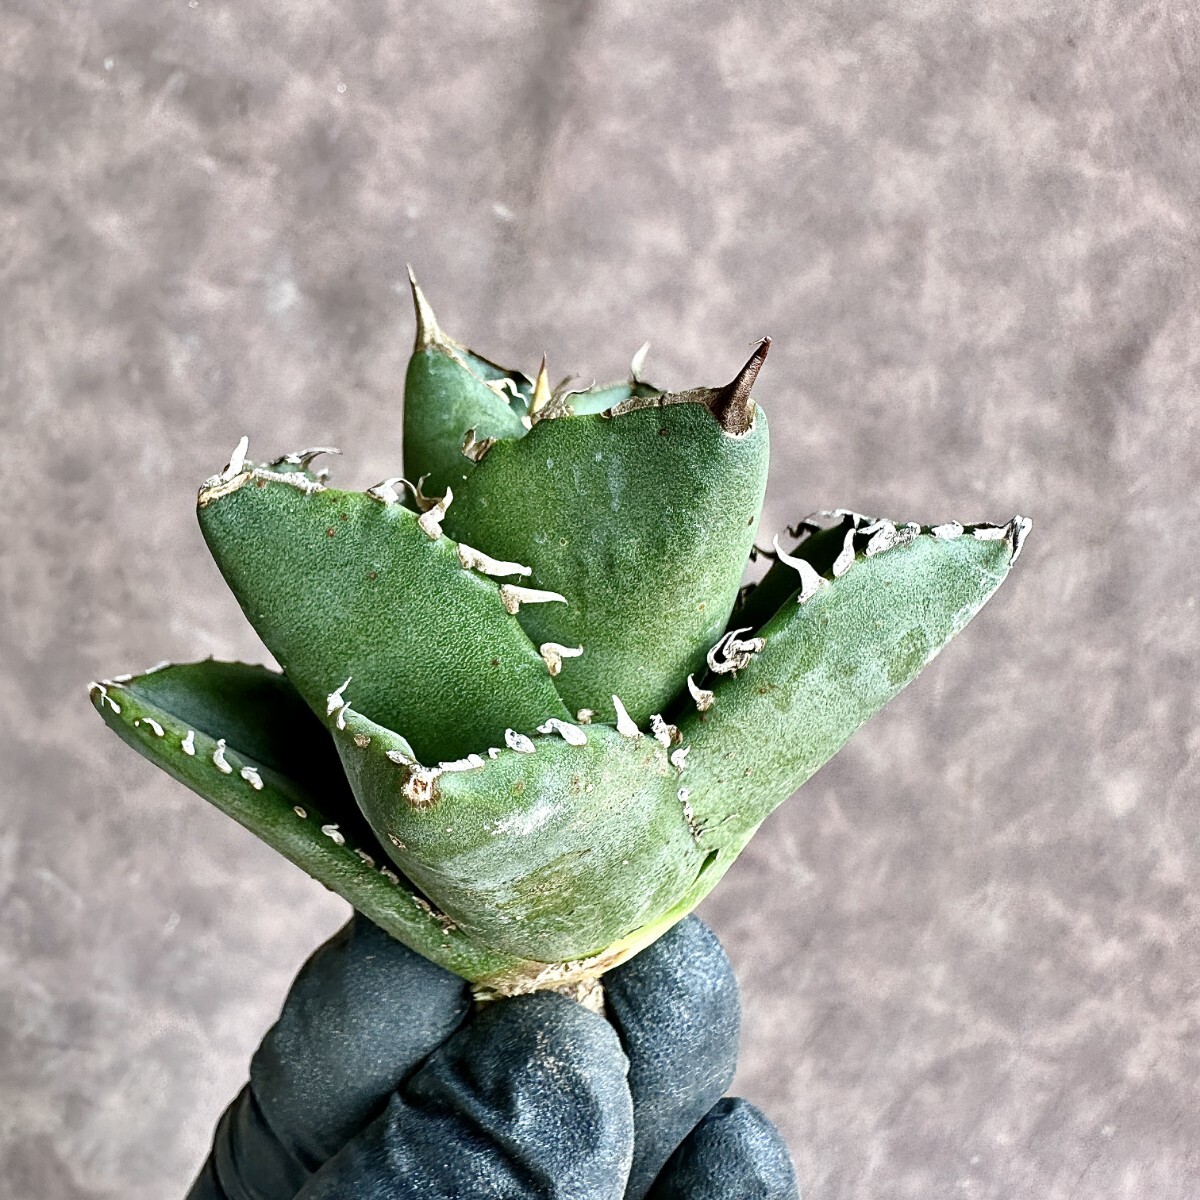 【Lj_plants】Z43 アガベ チタノタ 柊月 短葉で肉厚 極美 極上株の画像4